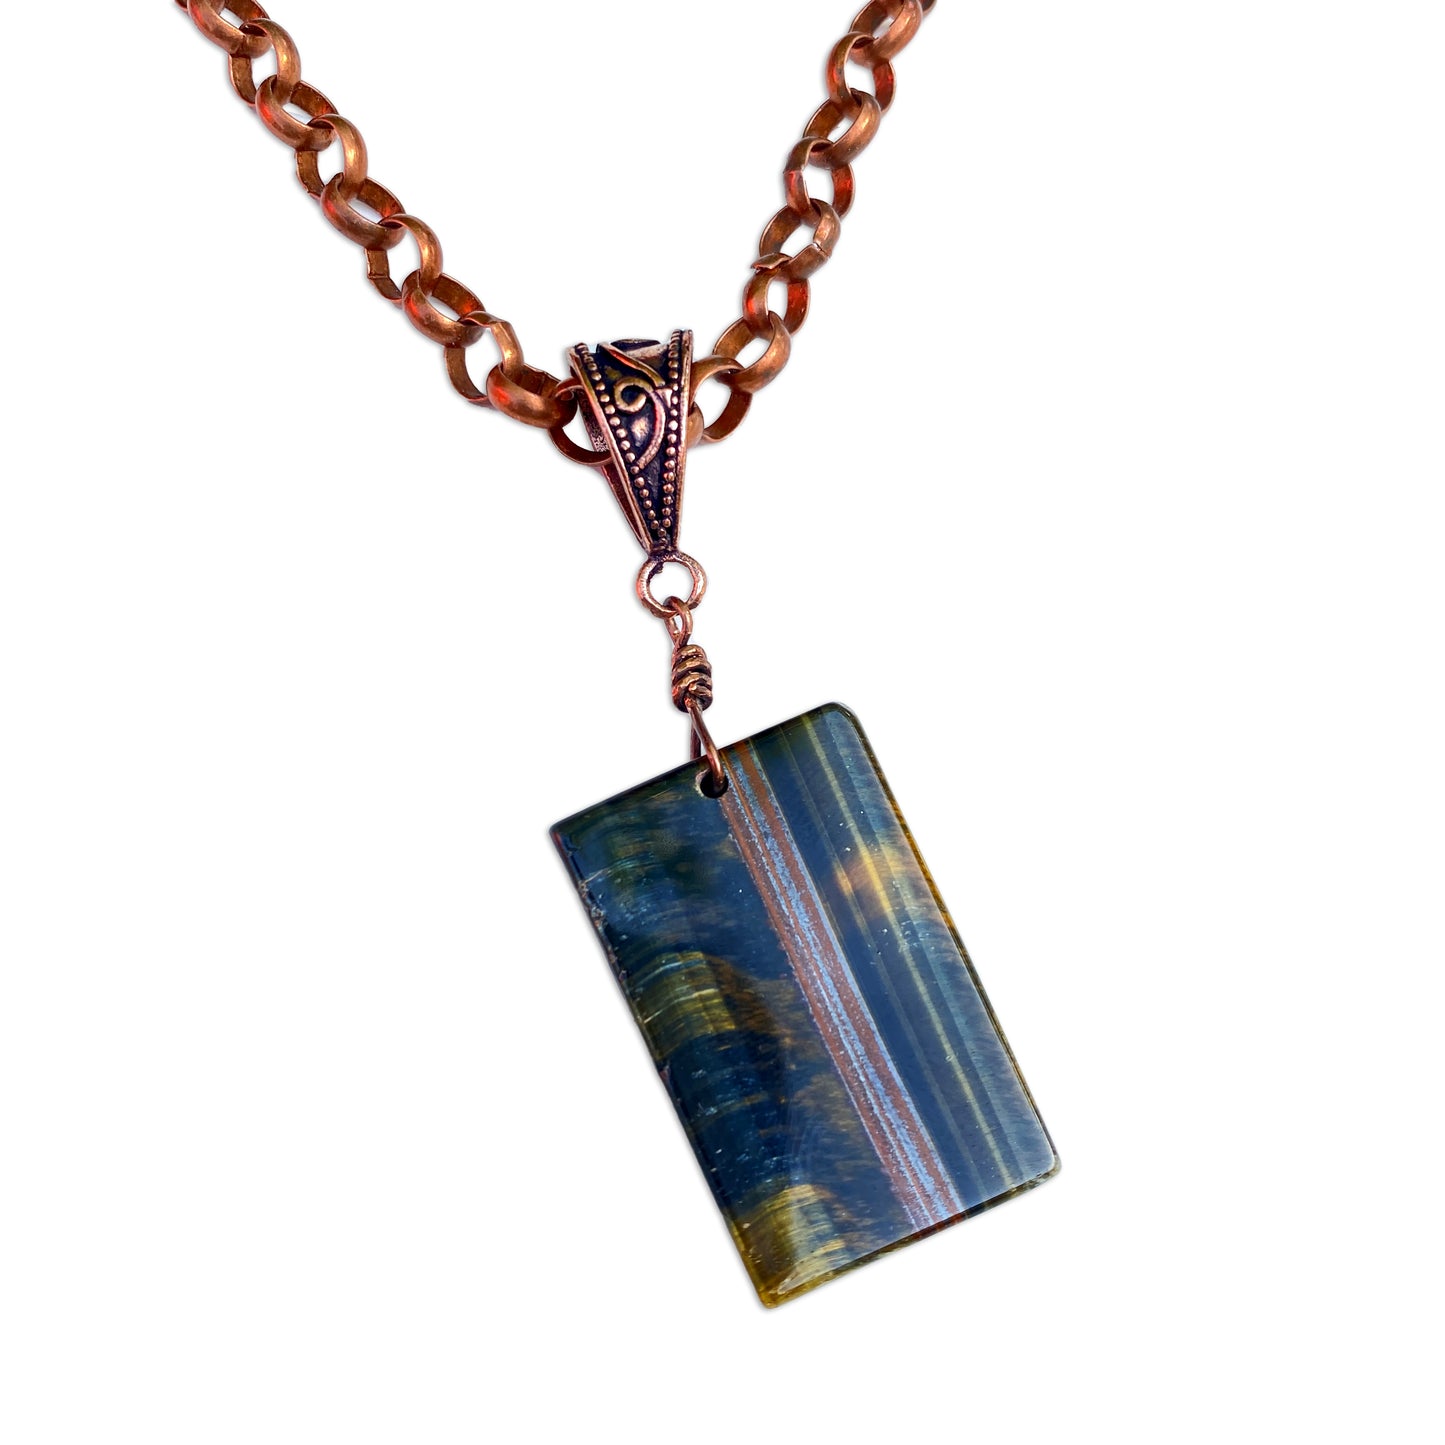 Tiger eye gemstone pendant on Copper Chain